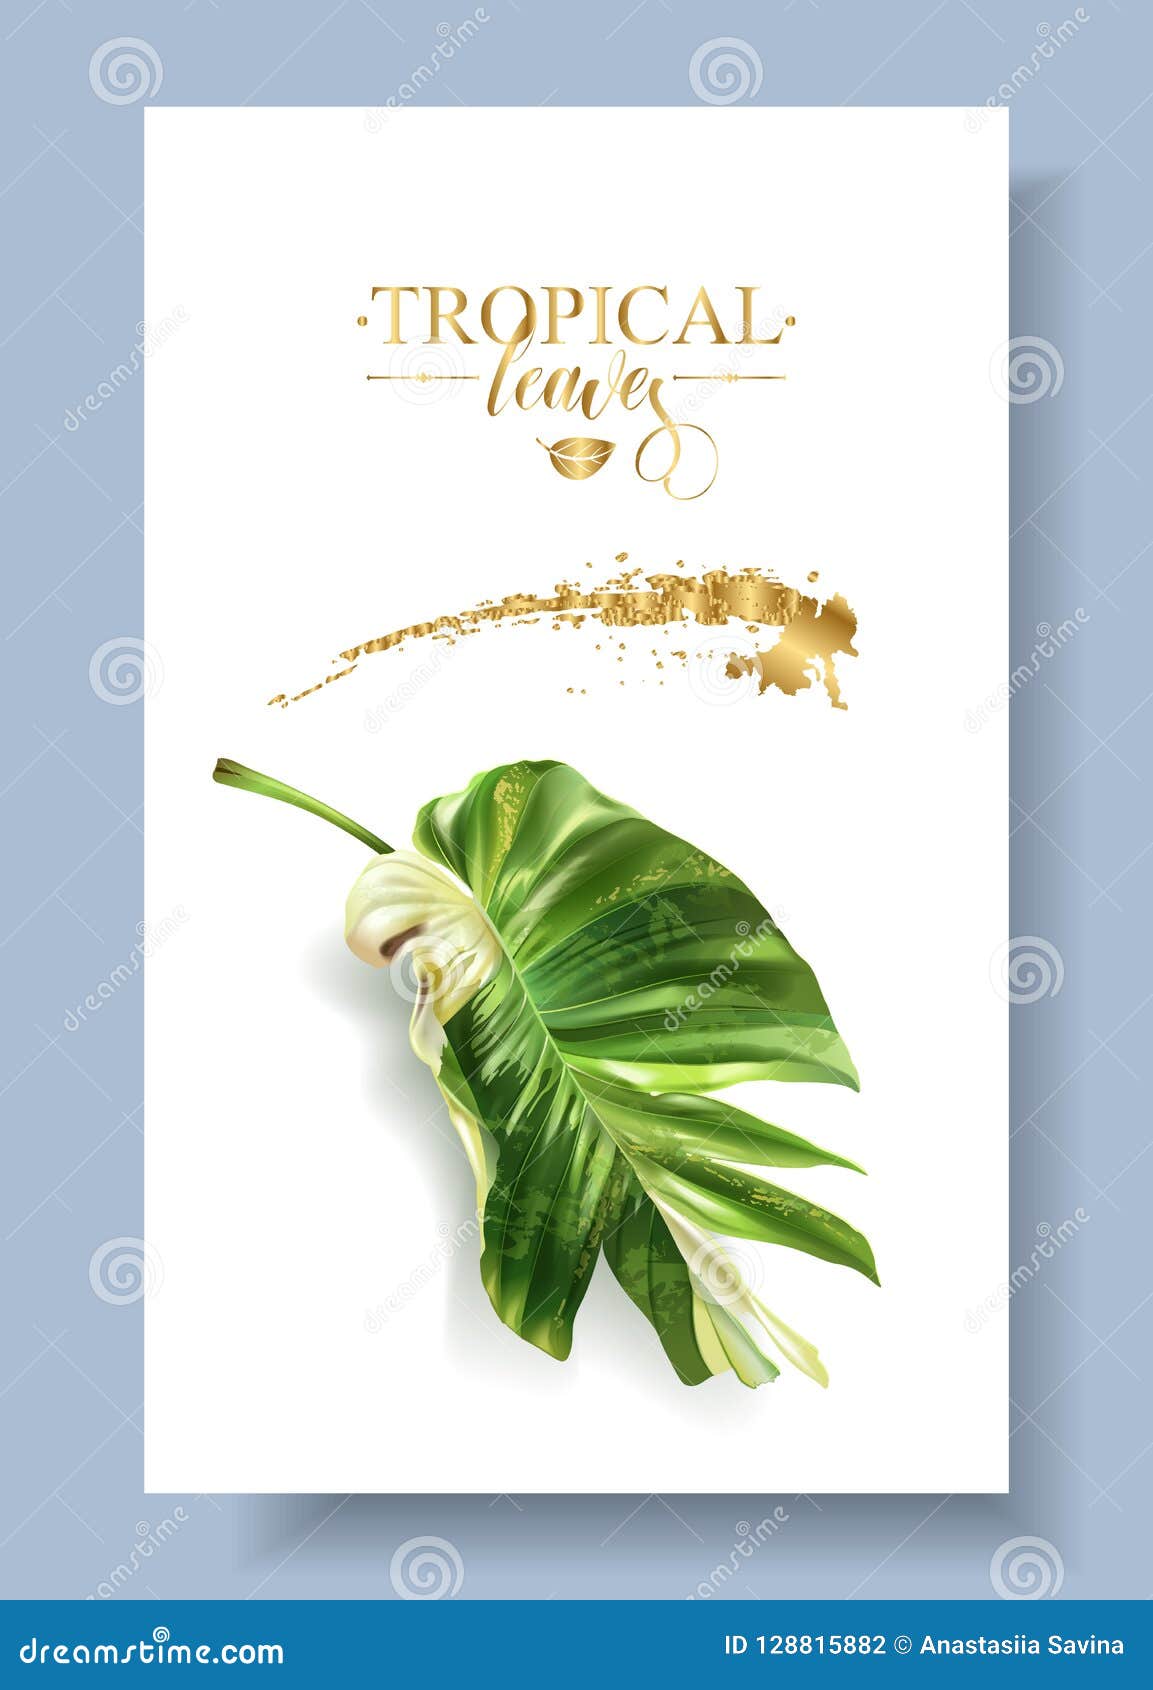  color banner of alocasia tropic leaf